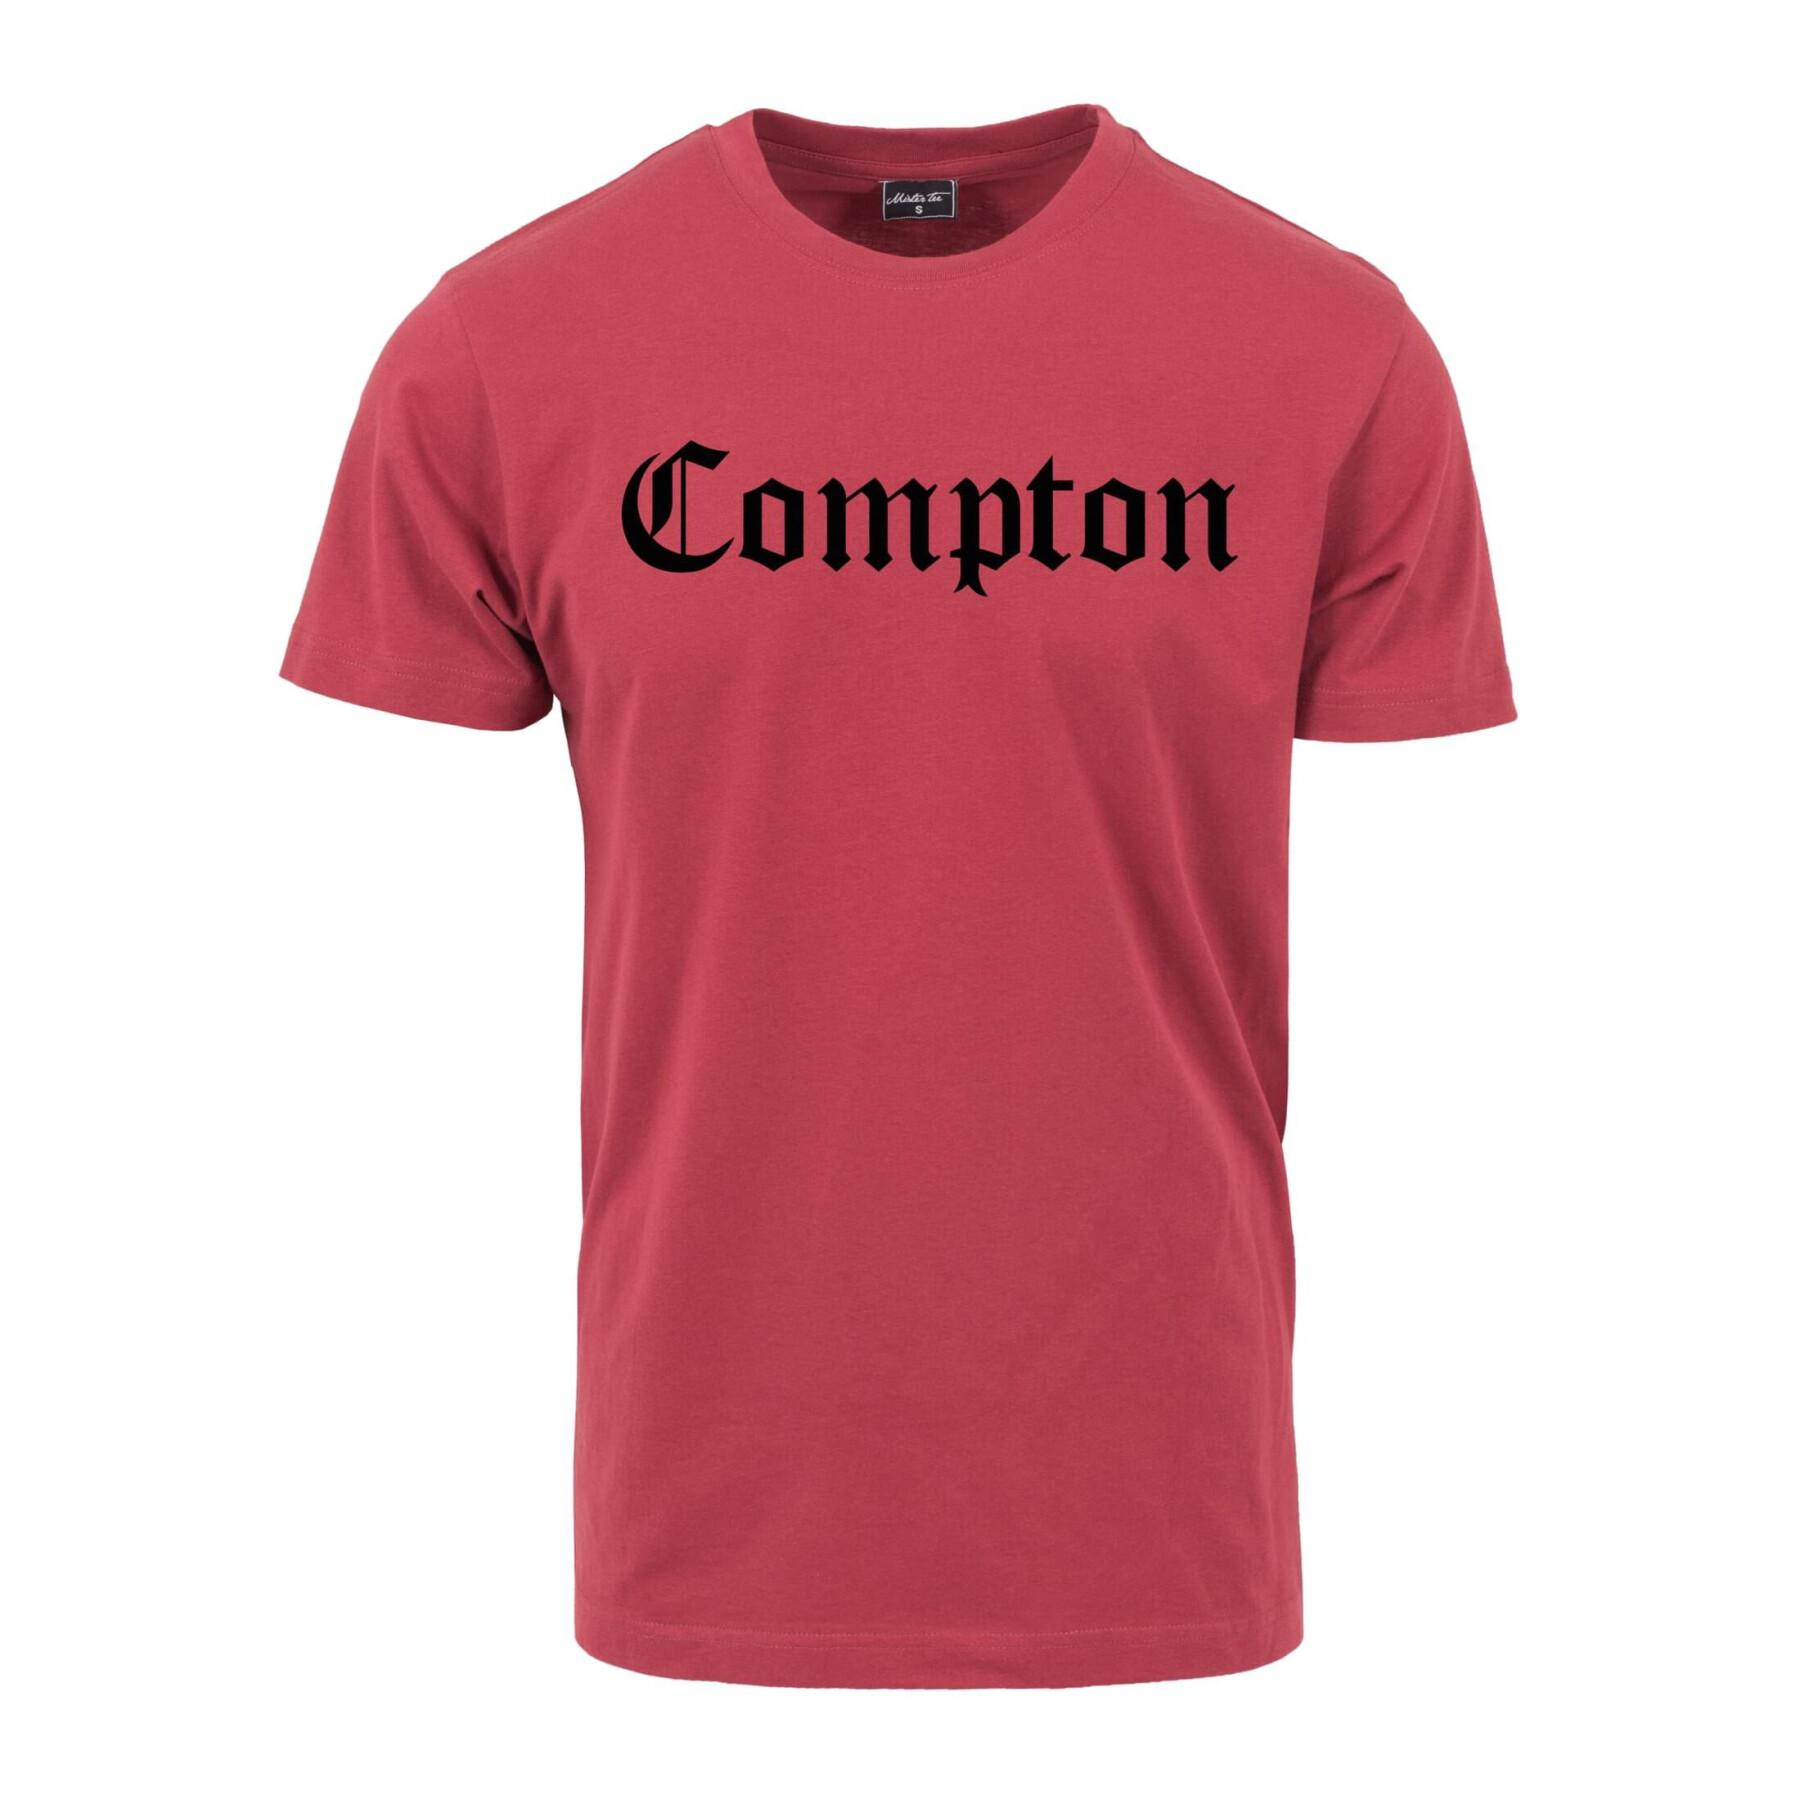 T-shirt Mister Tee COmpton